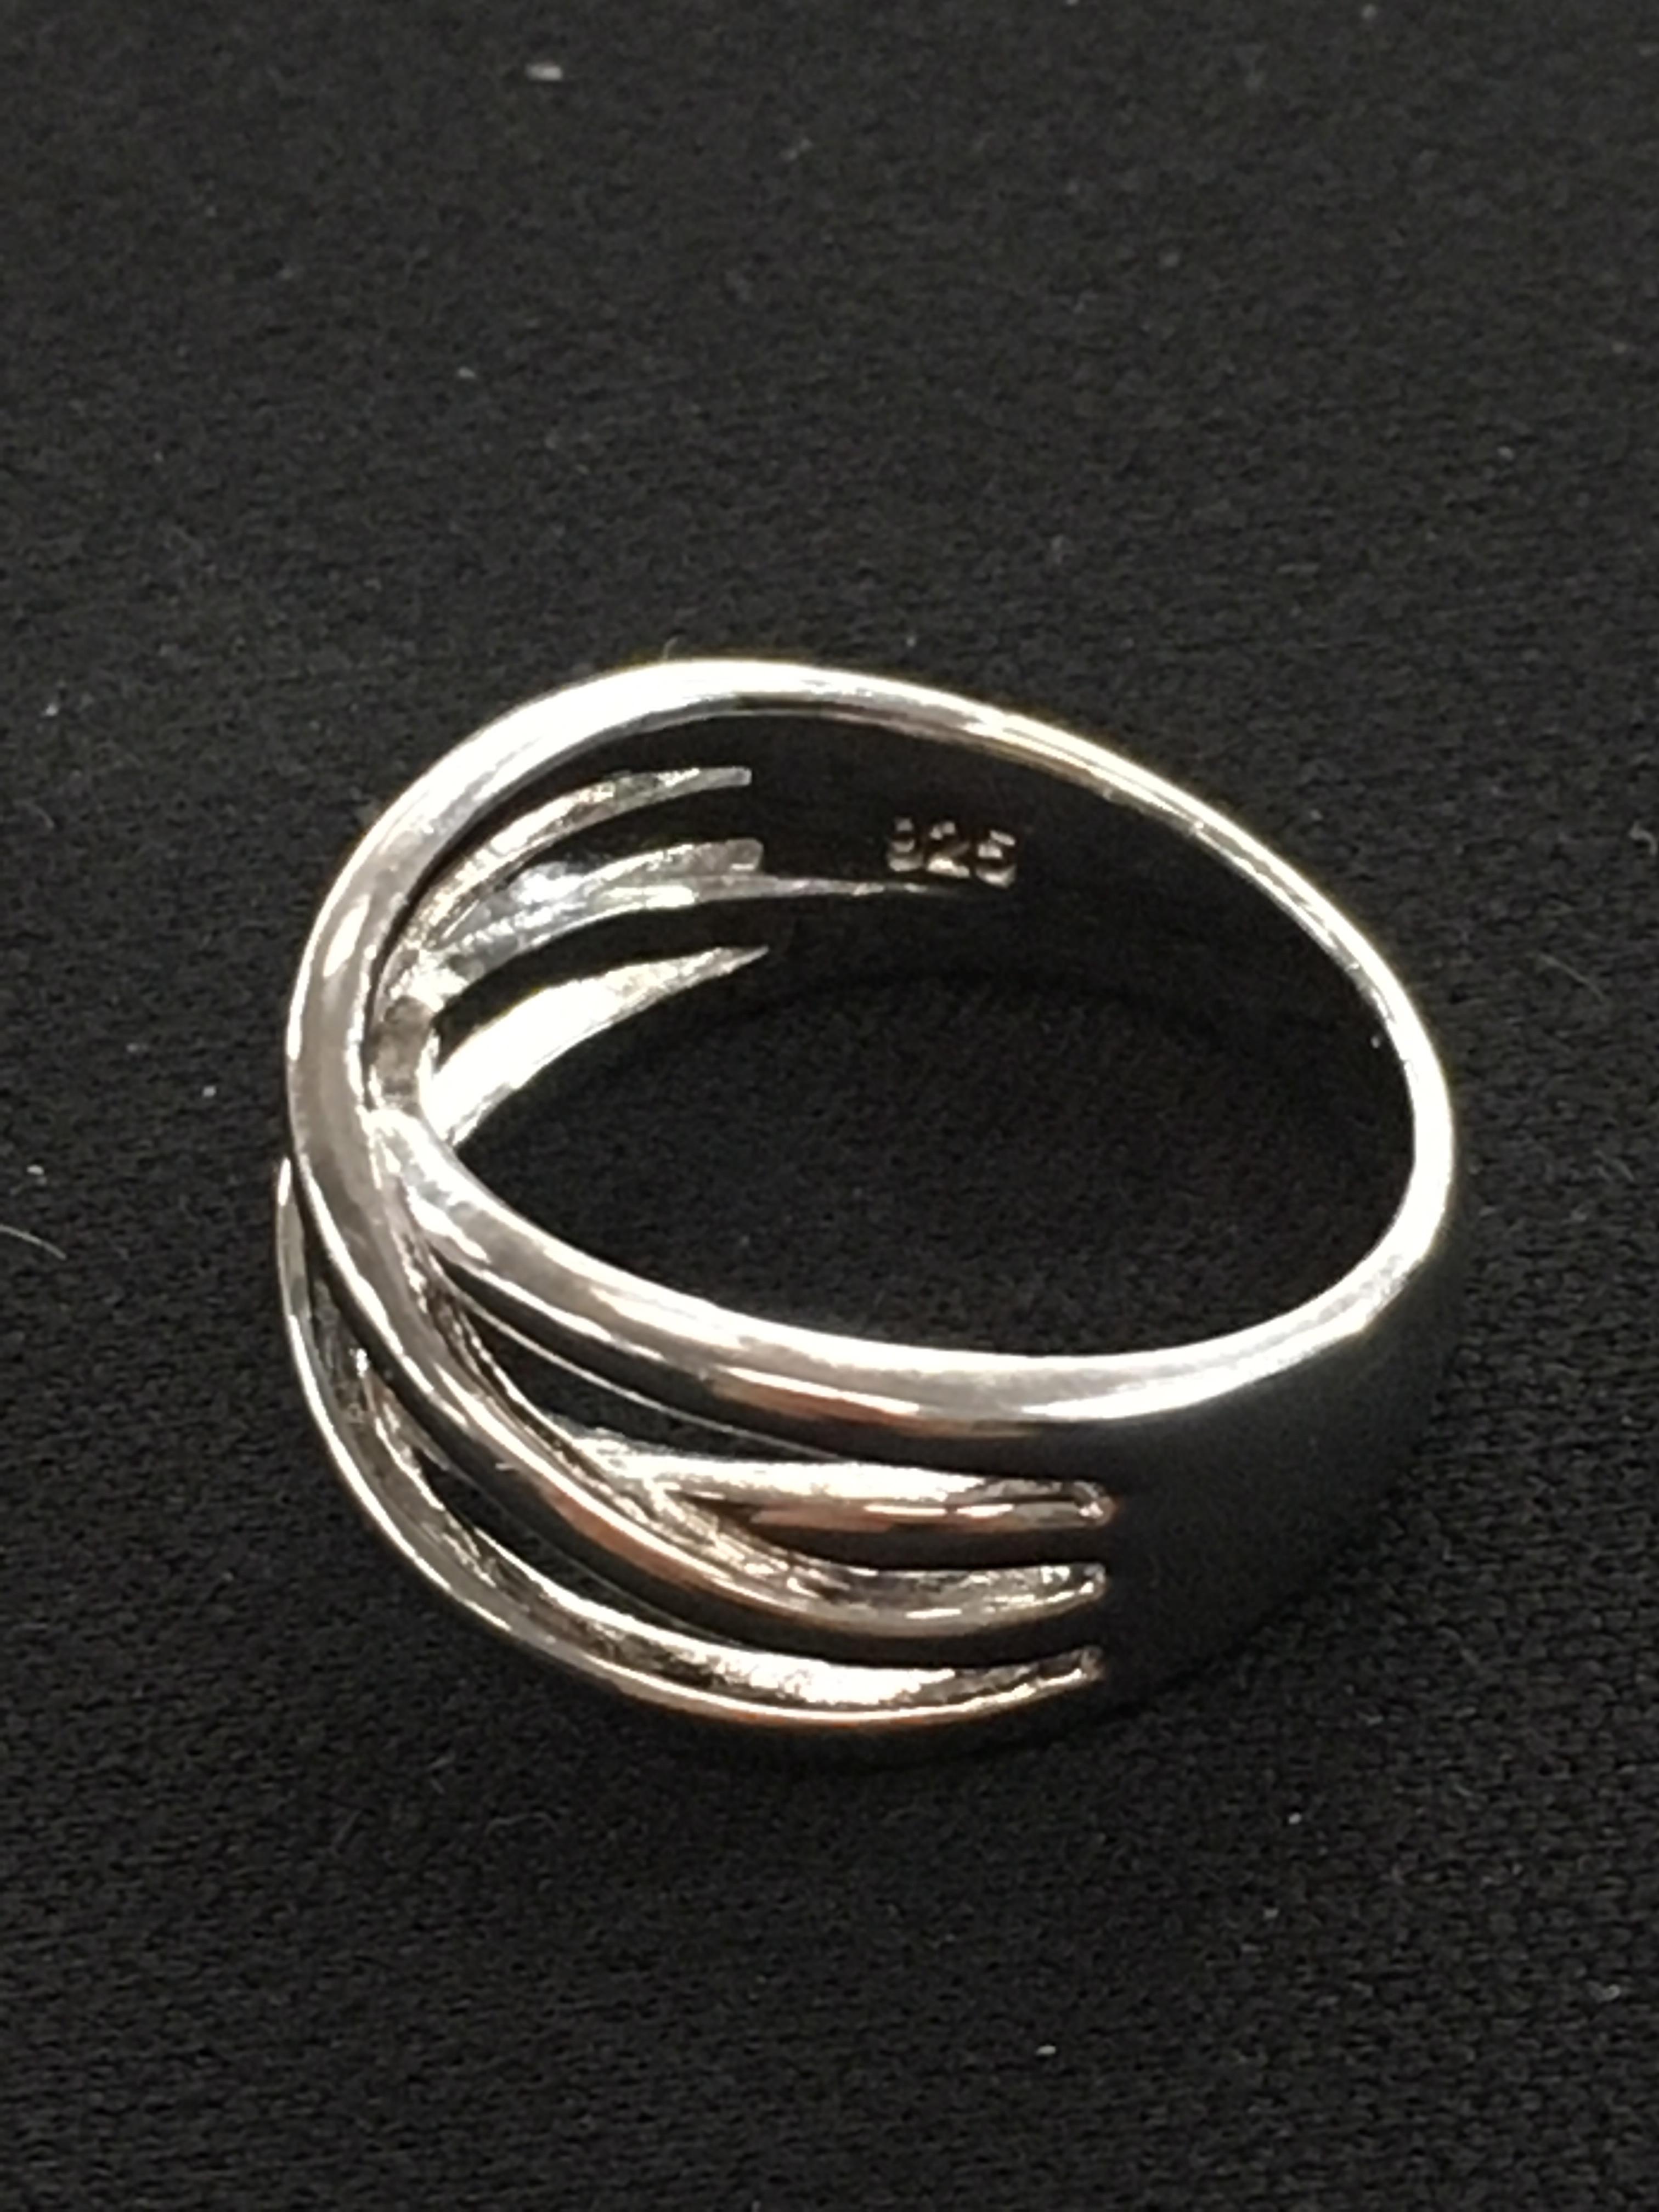 Modernist Celtic Knot Sterling Silver Ring Band - Size 6